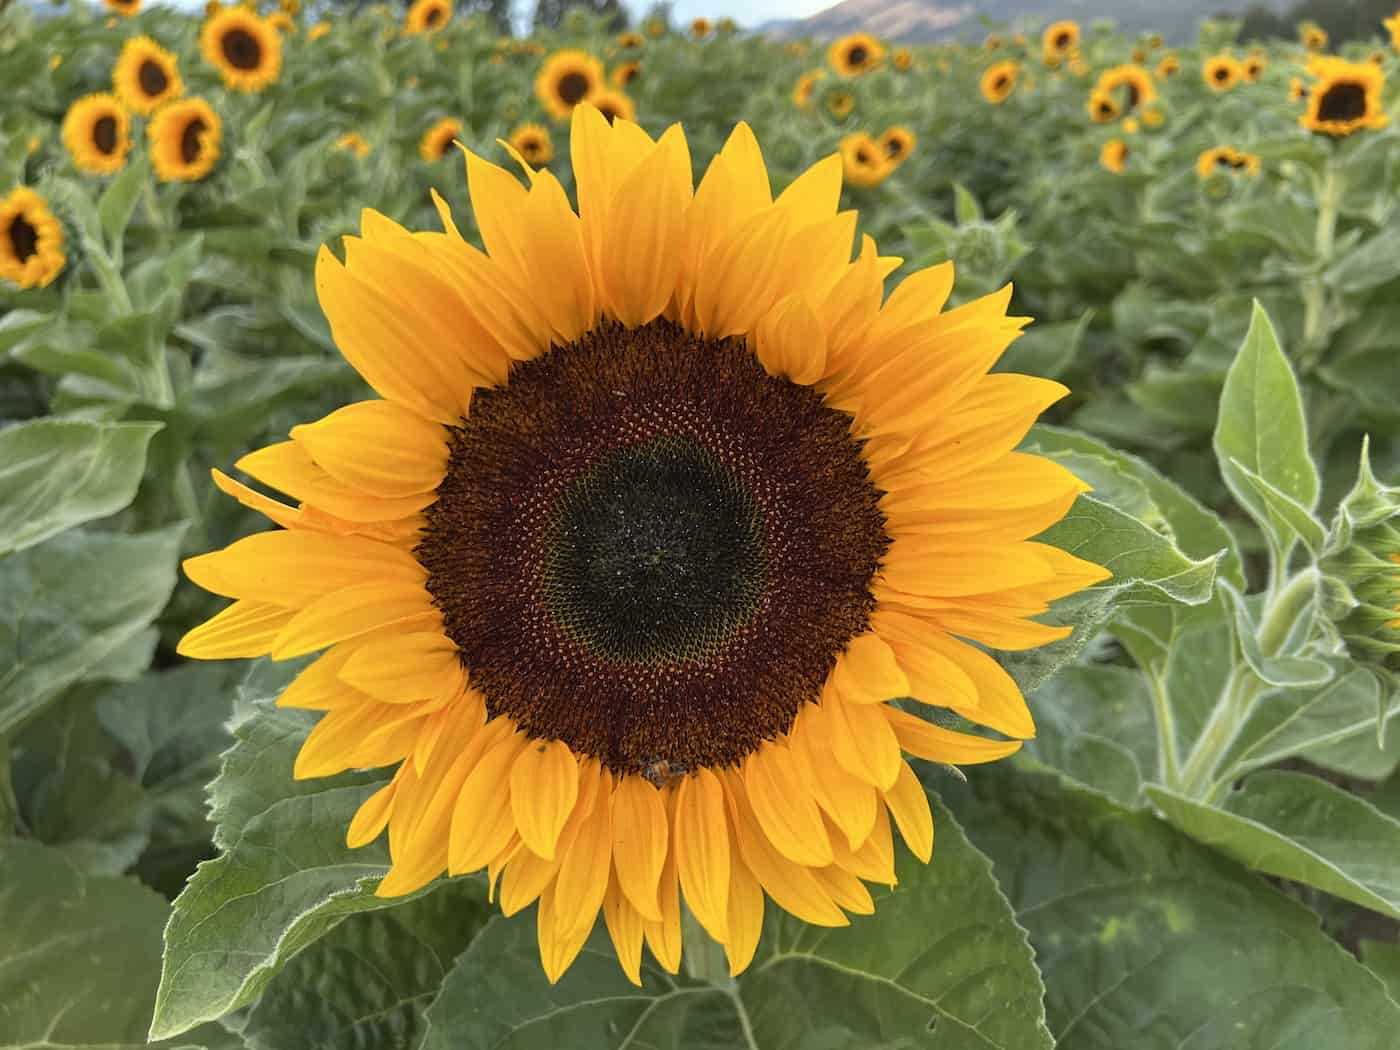 4. Pollen-Free Sunflowers